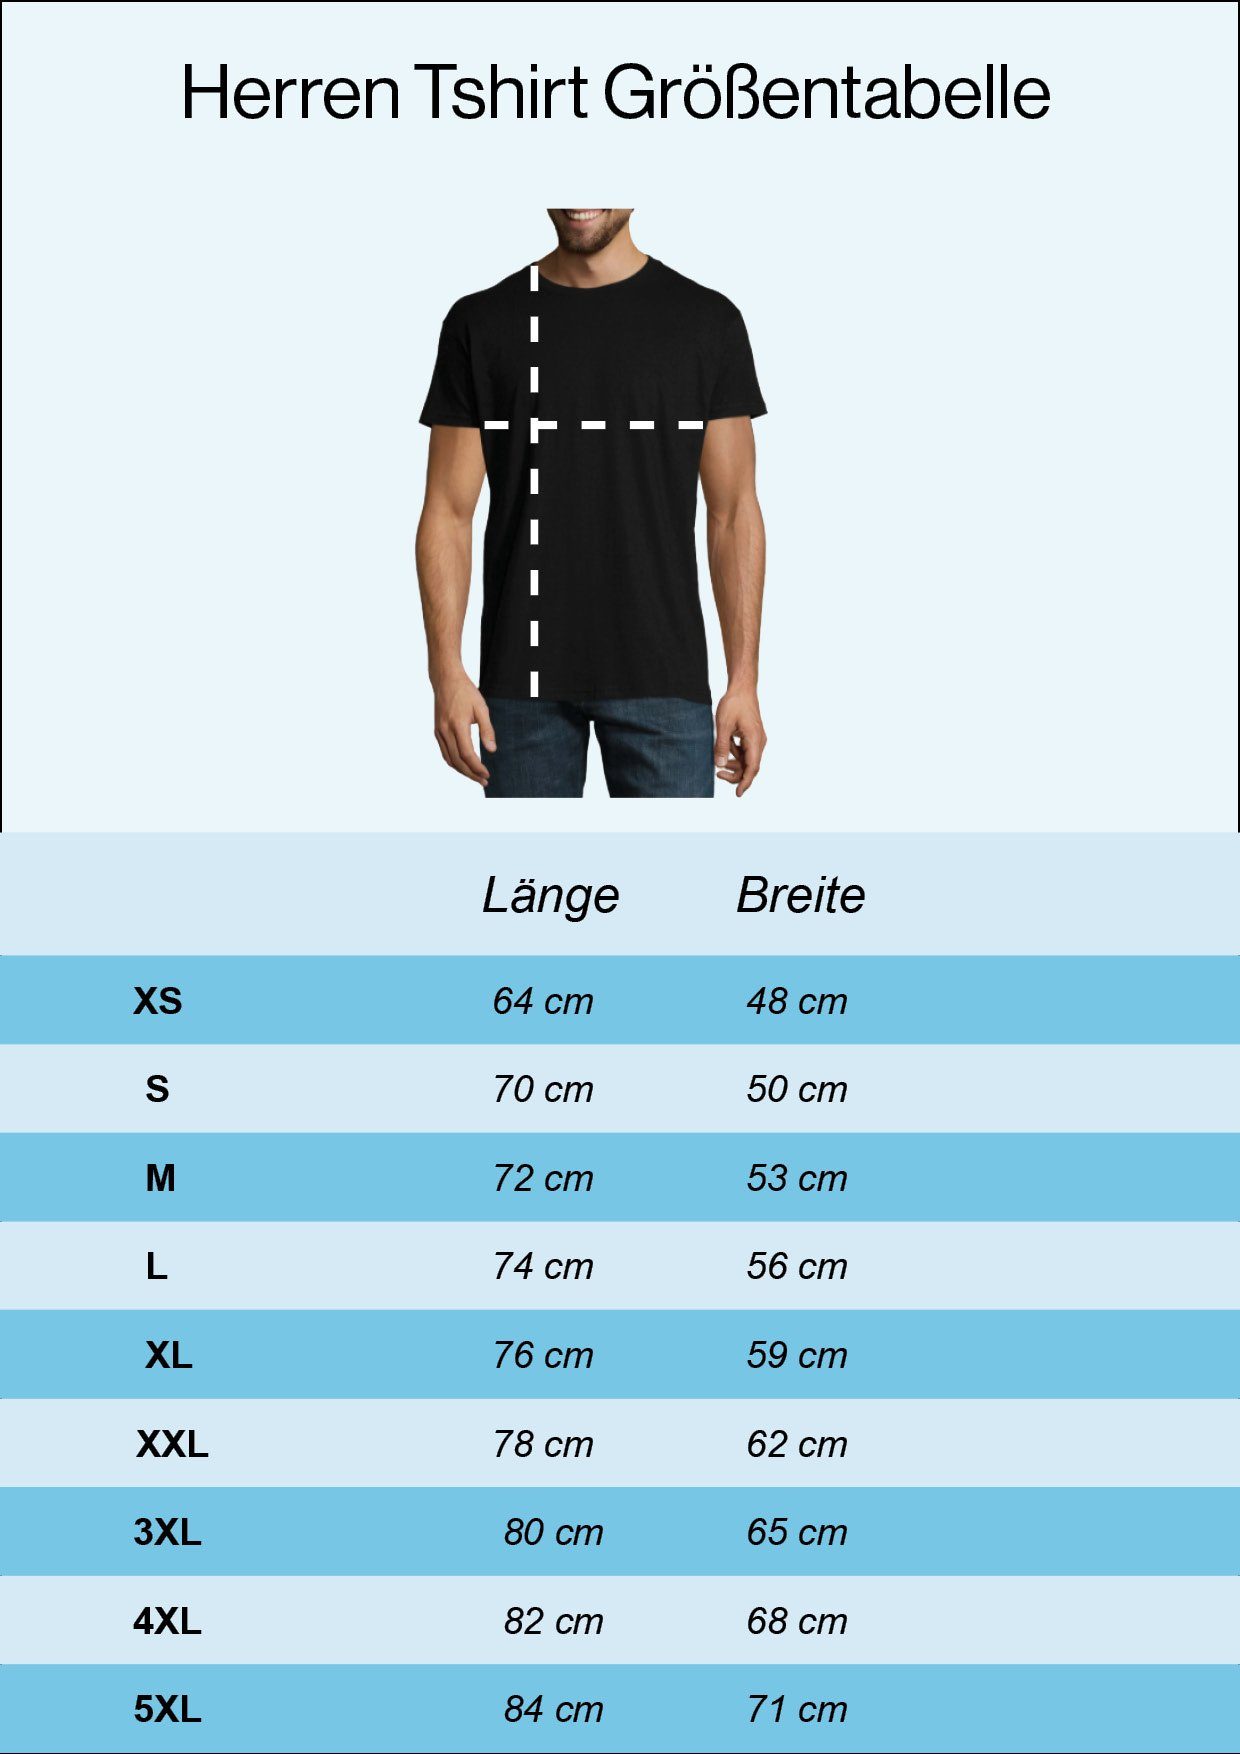 Youth Designz T-Shirt Trendigem Cube Magic Melting Navy Frontdruck Herren Shirt mit